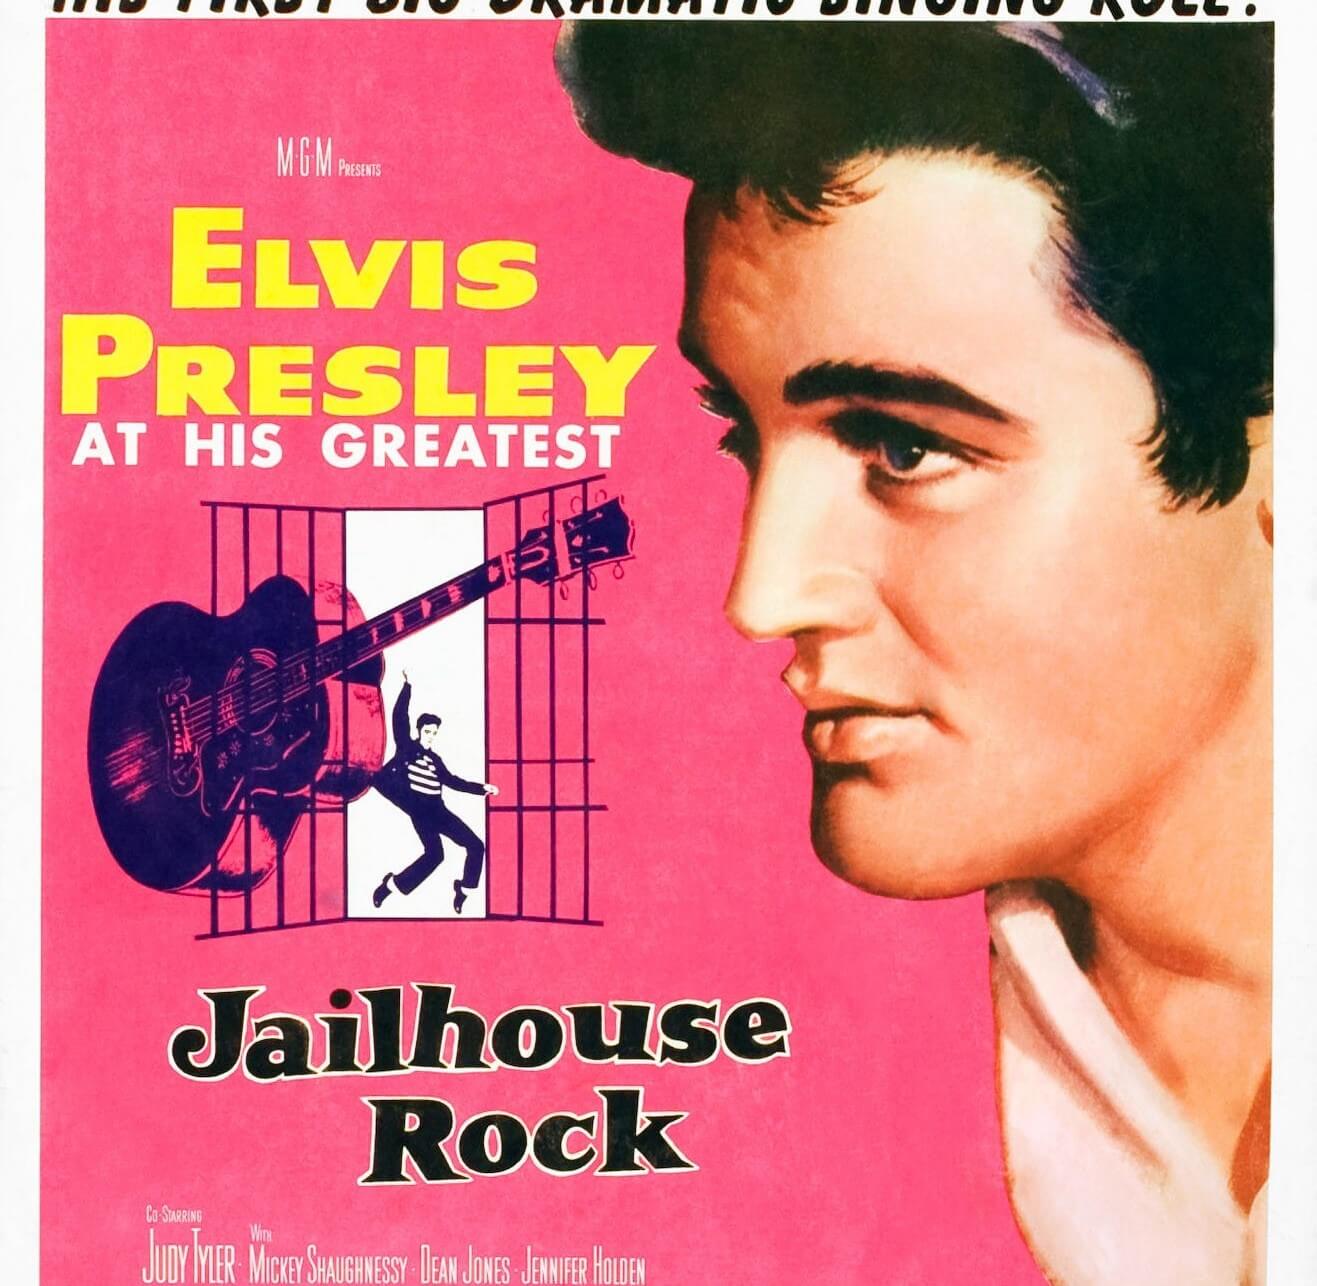 A pink poster for Elvis Presley's 'Jailhouse Rock'